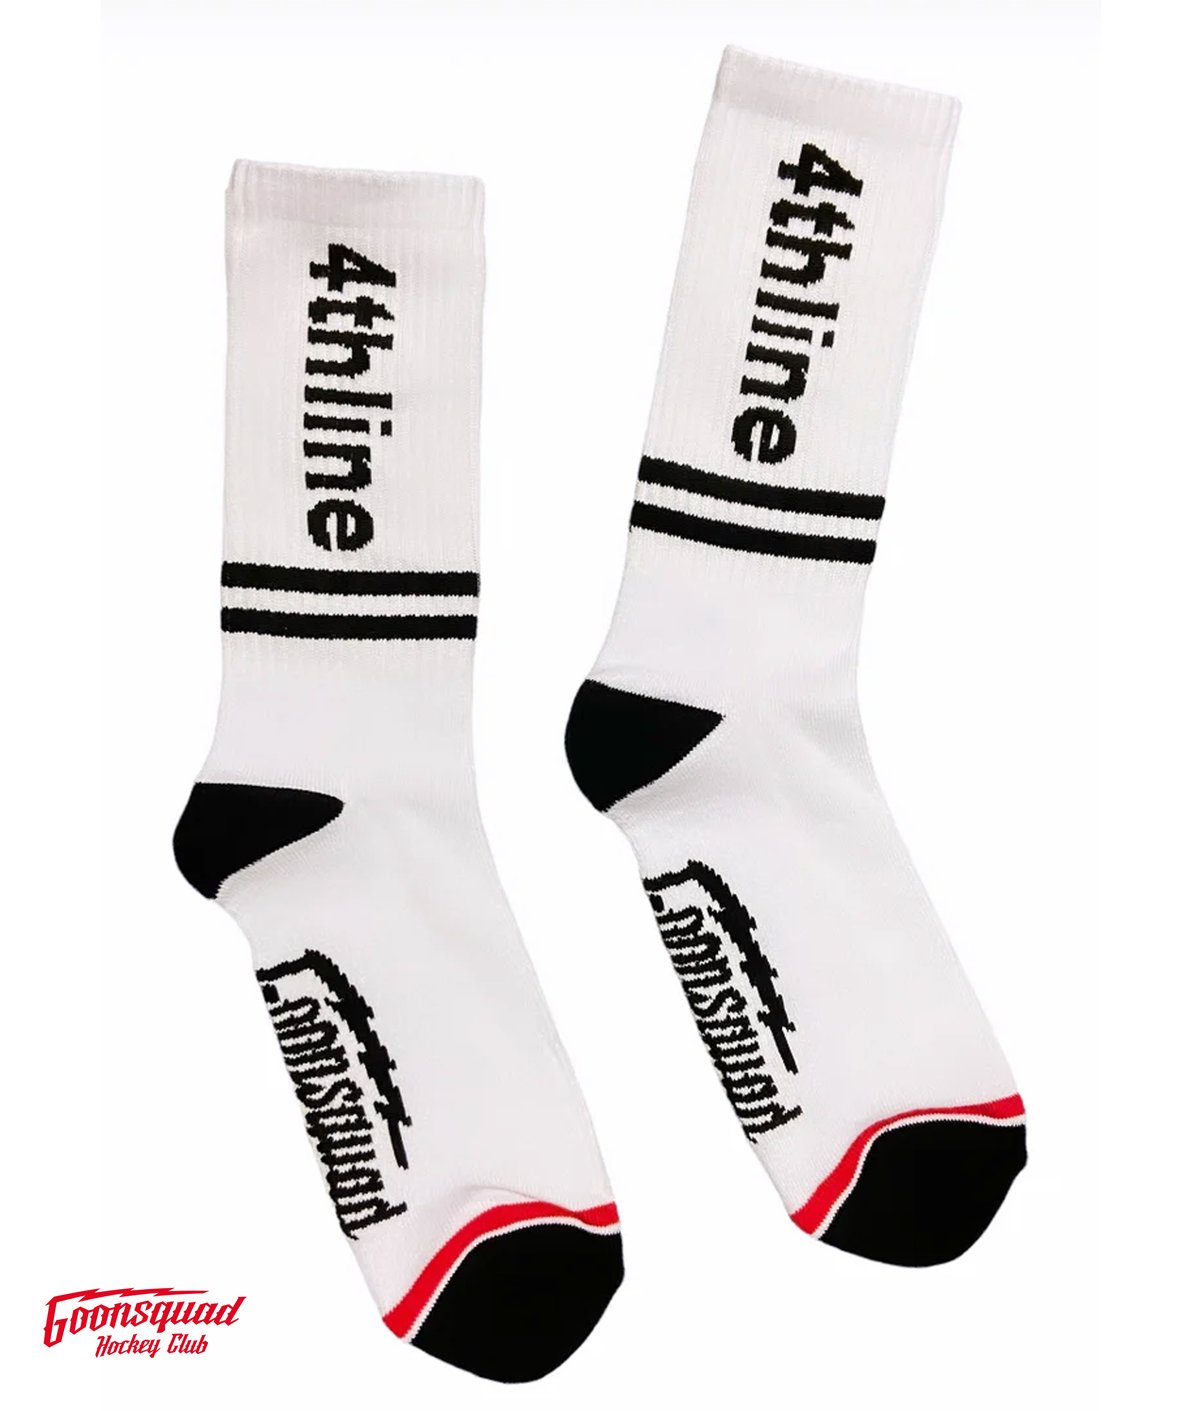 GS 4th Line Classic Socks